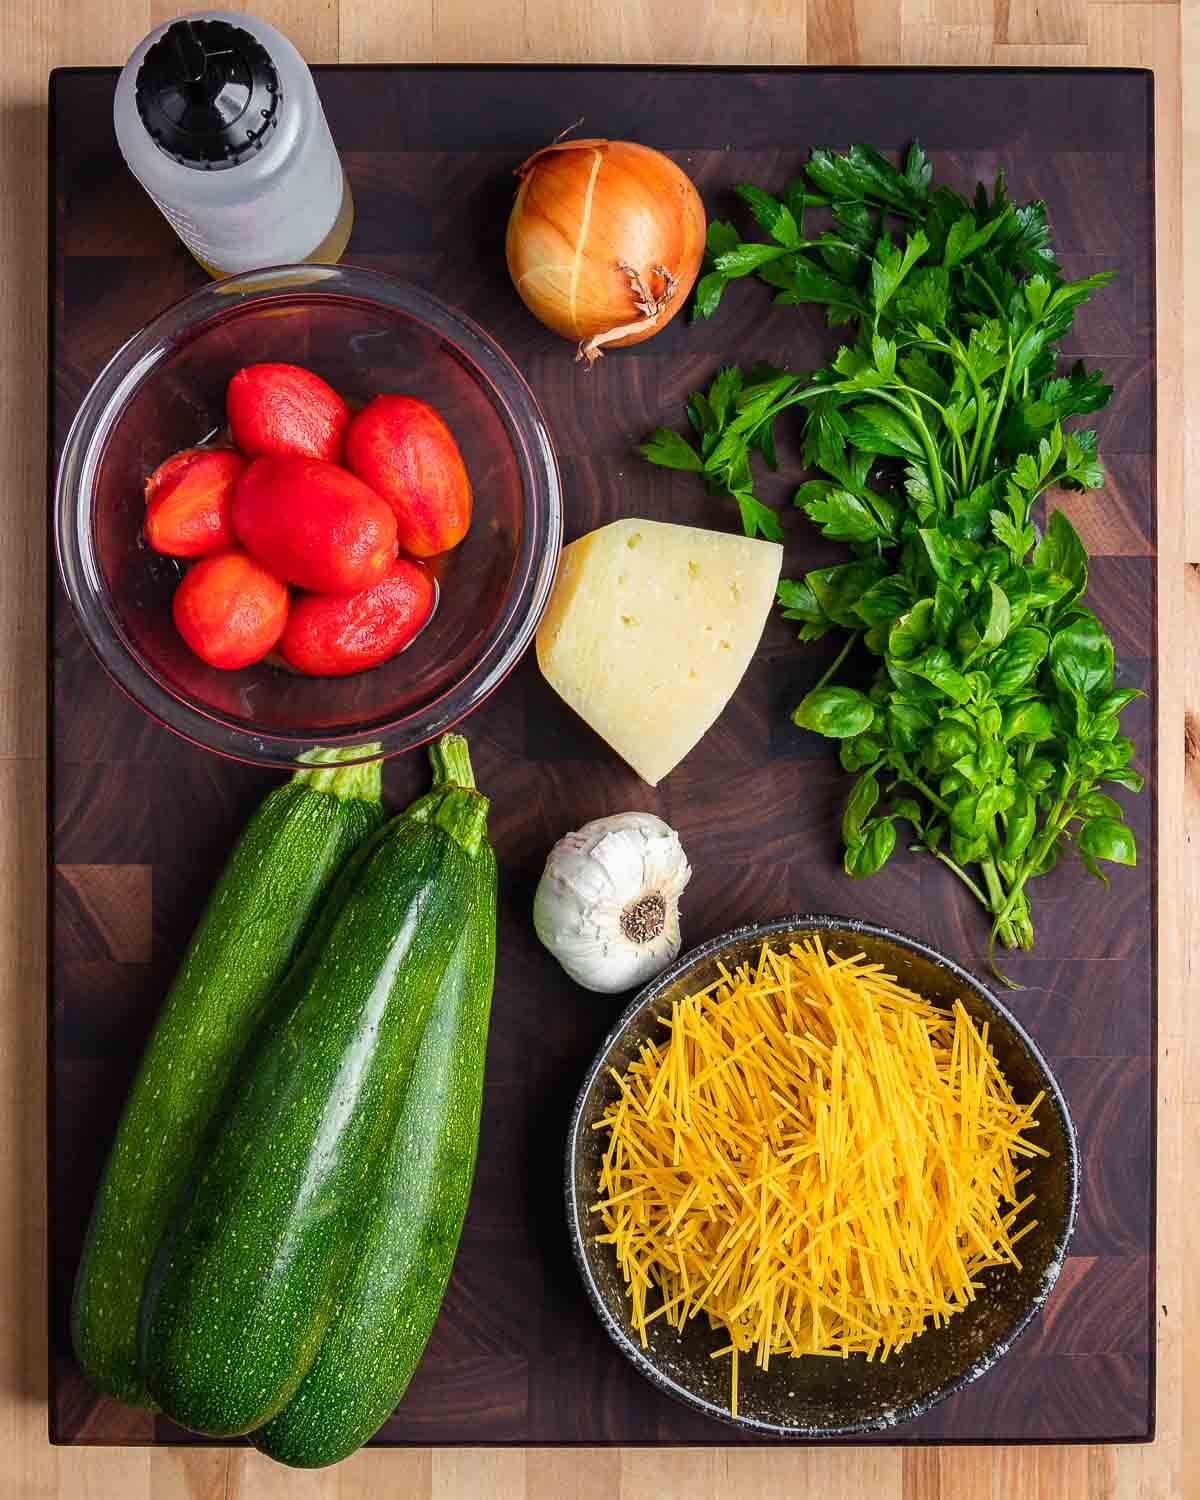 Ingredients shown: olive oil, plum tomatoes, onion, Pecorino, parsley, basil, garlic, zucchini, and broken spaghetti.